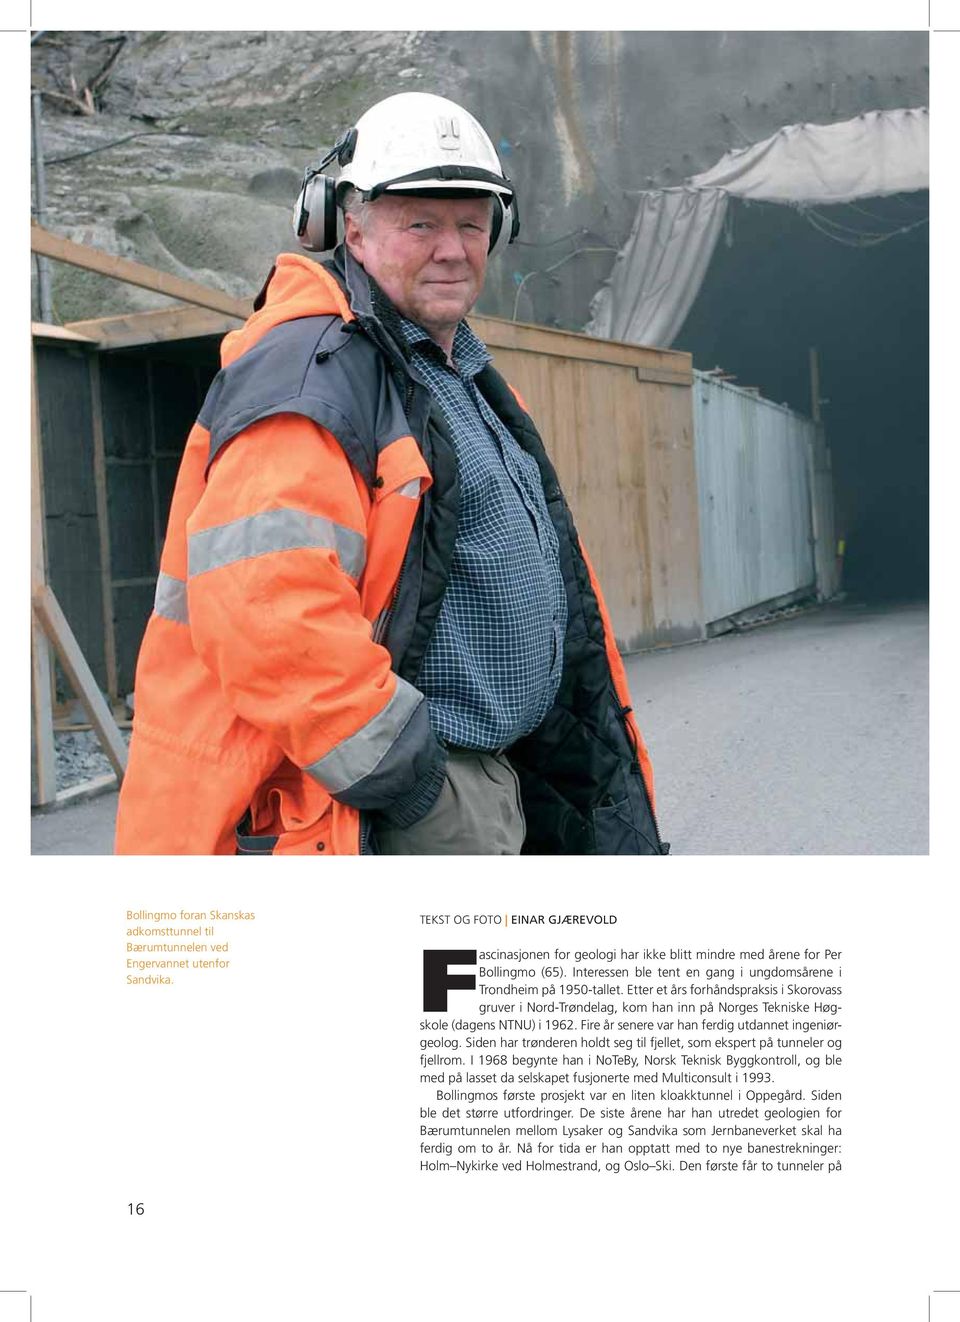 Etter et års forhåndspraksis i Skorovass gruver i Nord-Trøndelag, kom han inn på Norges Tekniske Høgskole (dagens NTNU) i 1962. Fire år senere var han ferdig utdannet ingeniørgeolog.